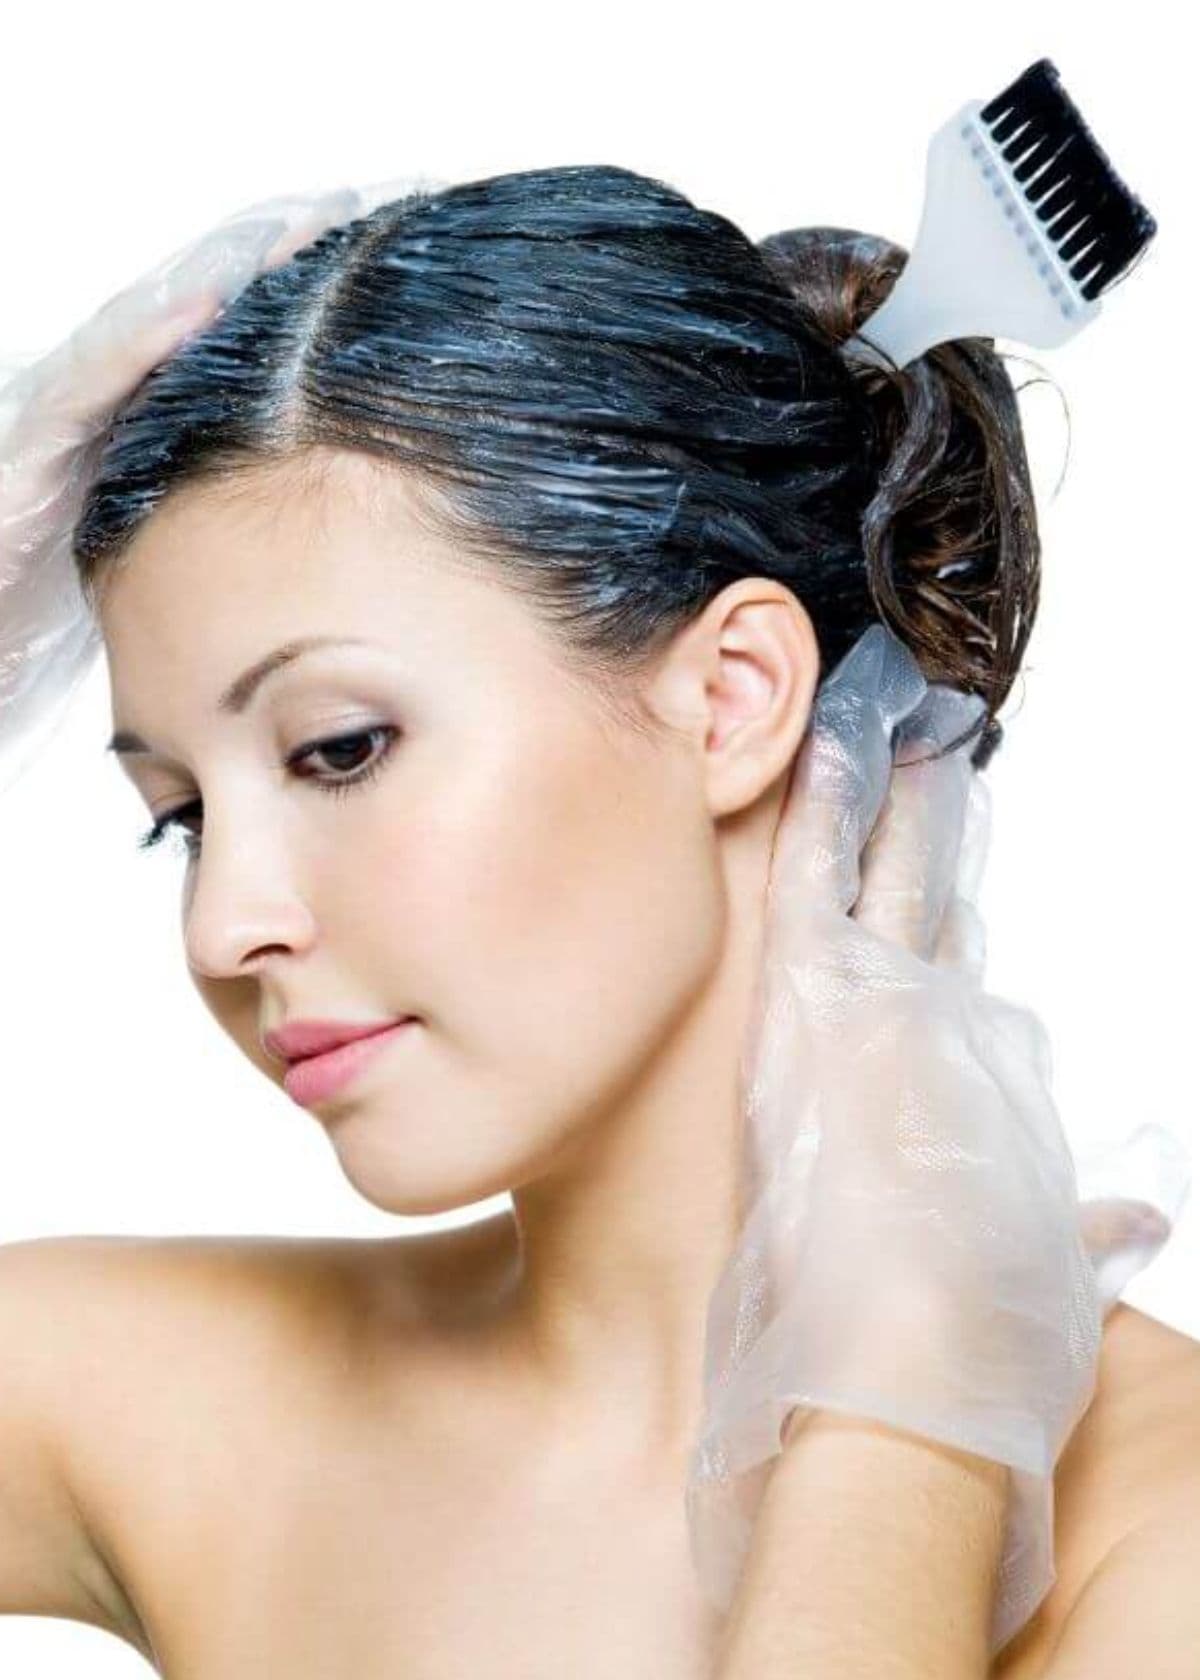 How to Use Hair Straightening Shampoo?